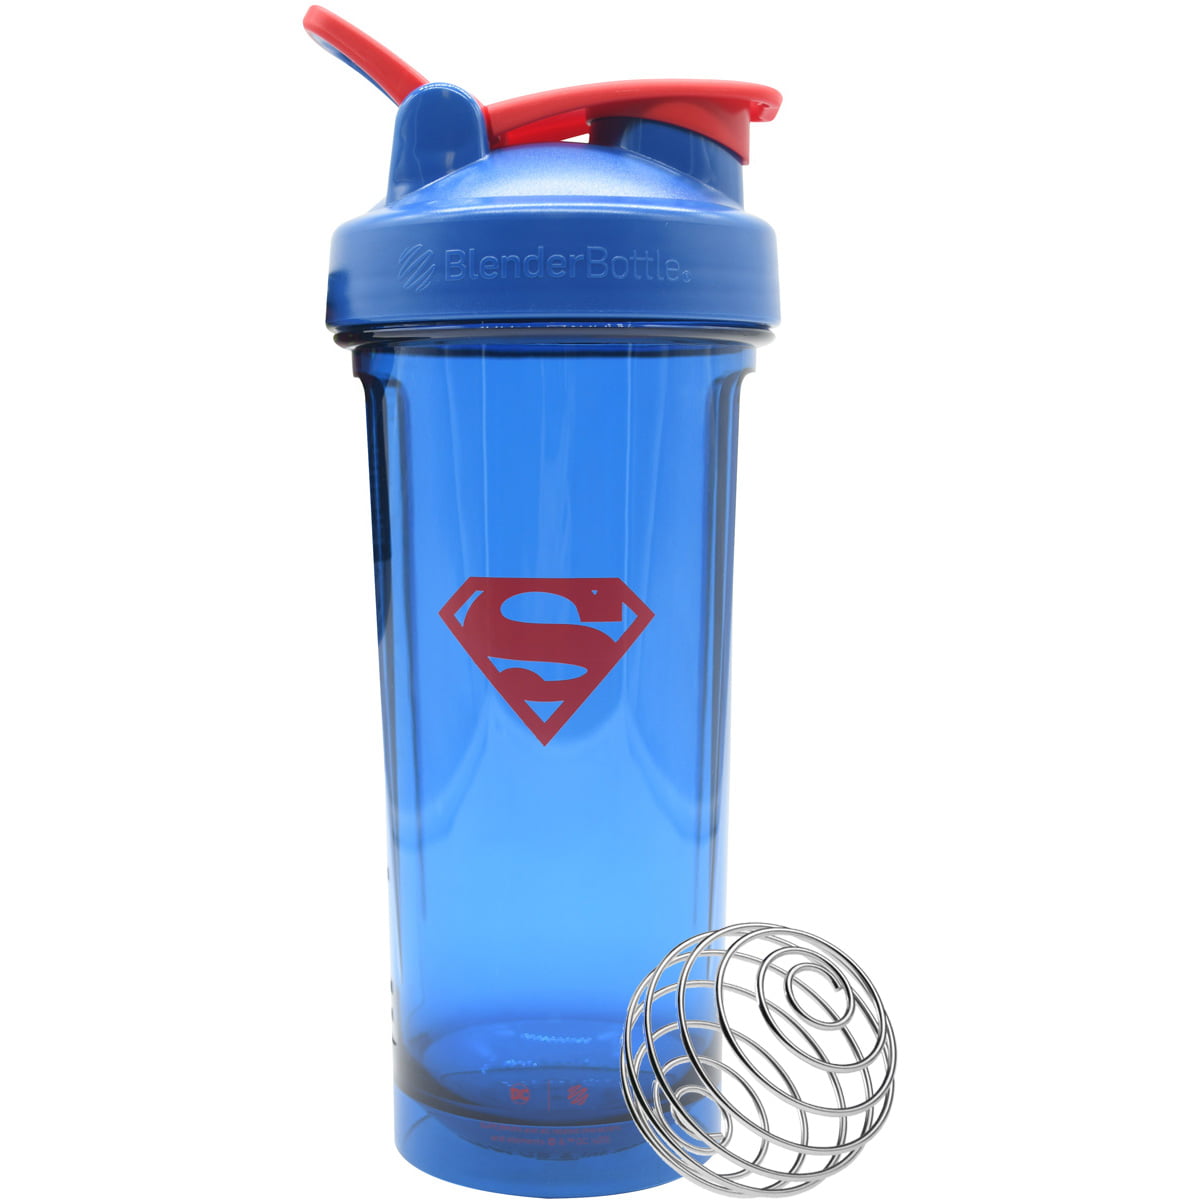 Paladone Batman Protein Shaker Bottle, 23 oz, Officially Licensed DC Comics  Blender Cup